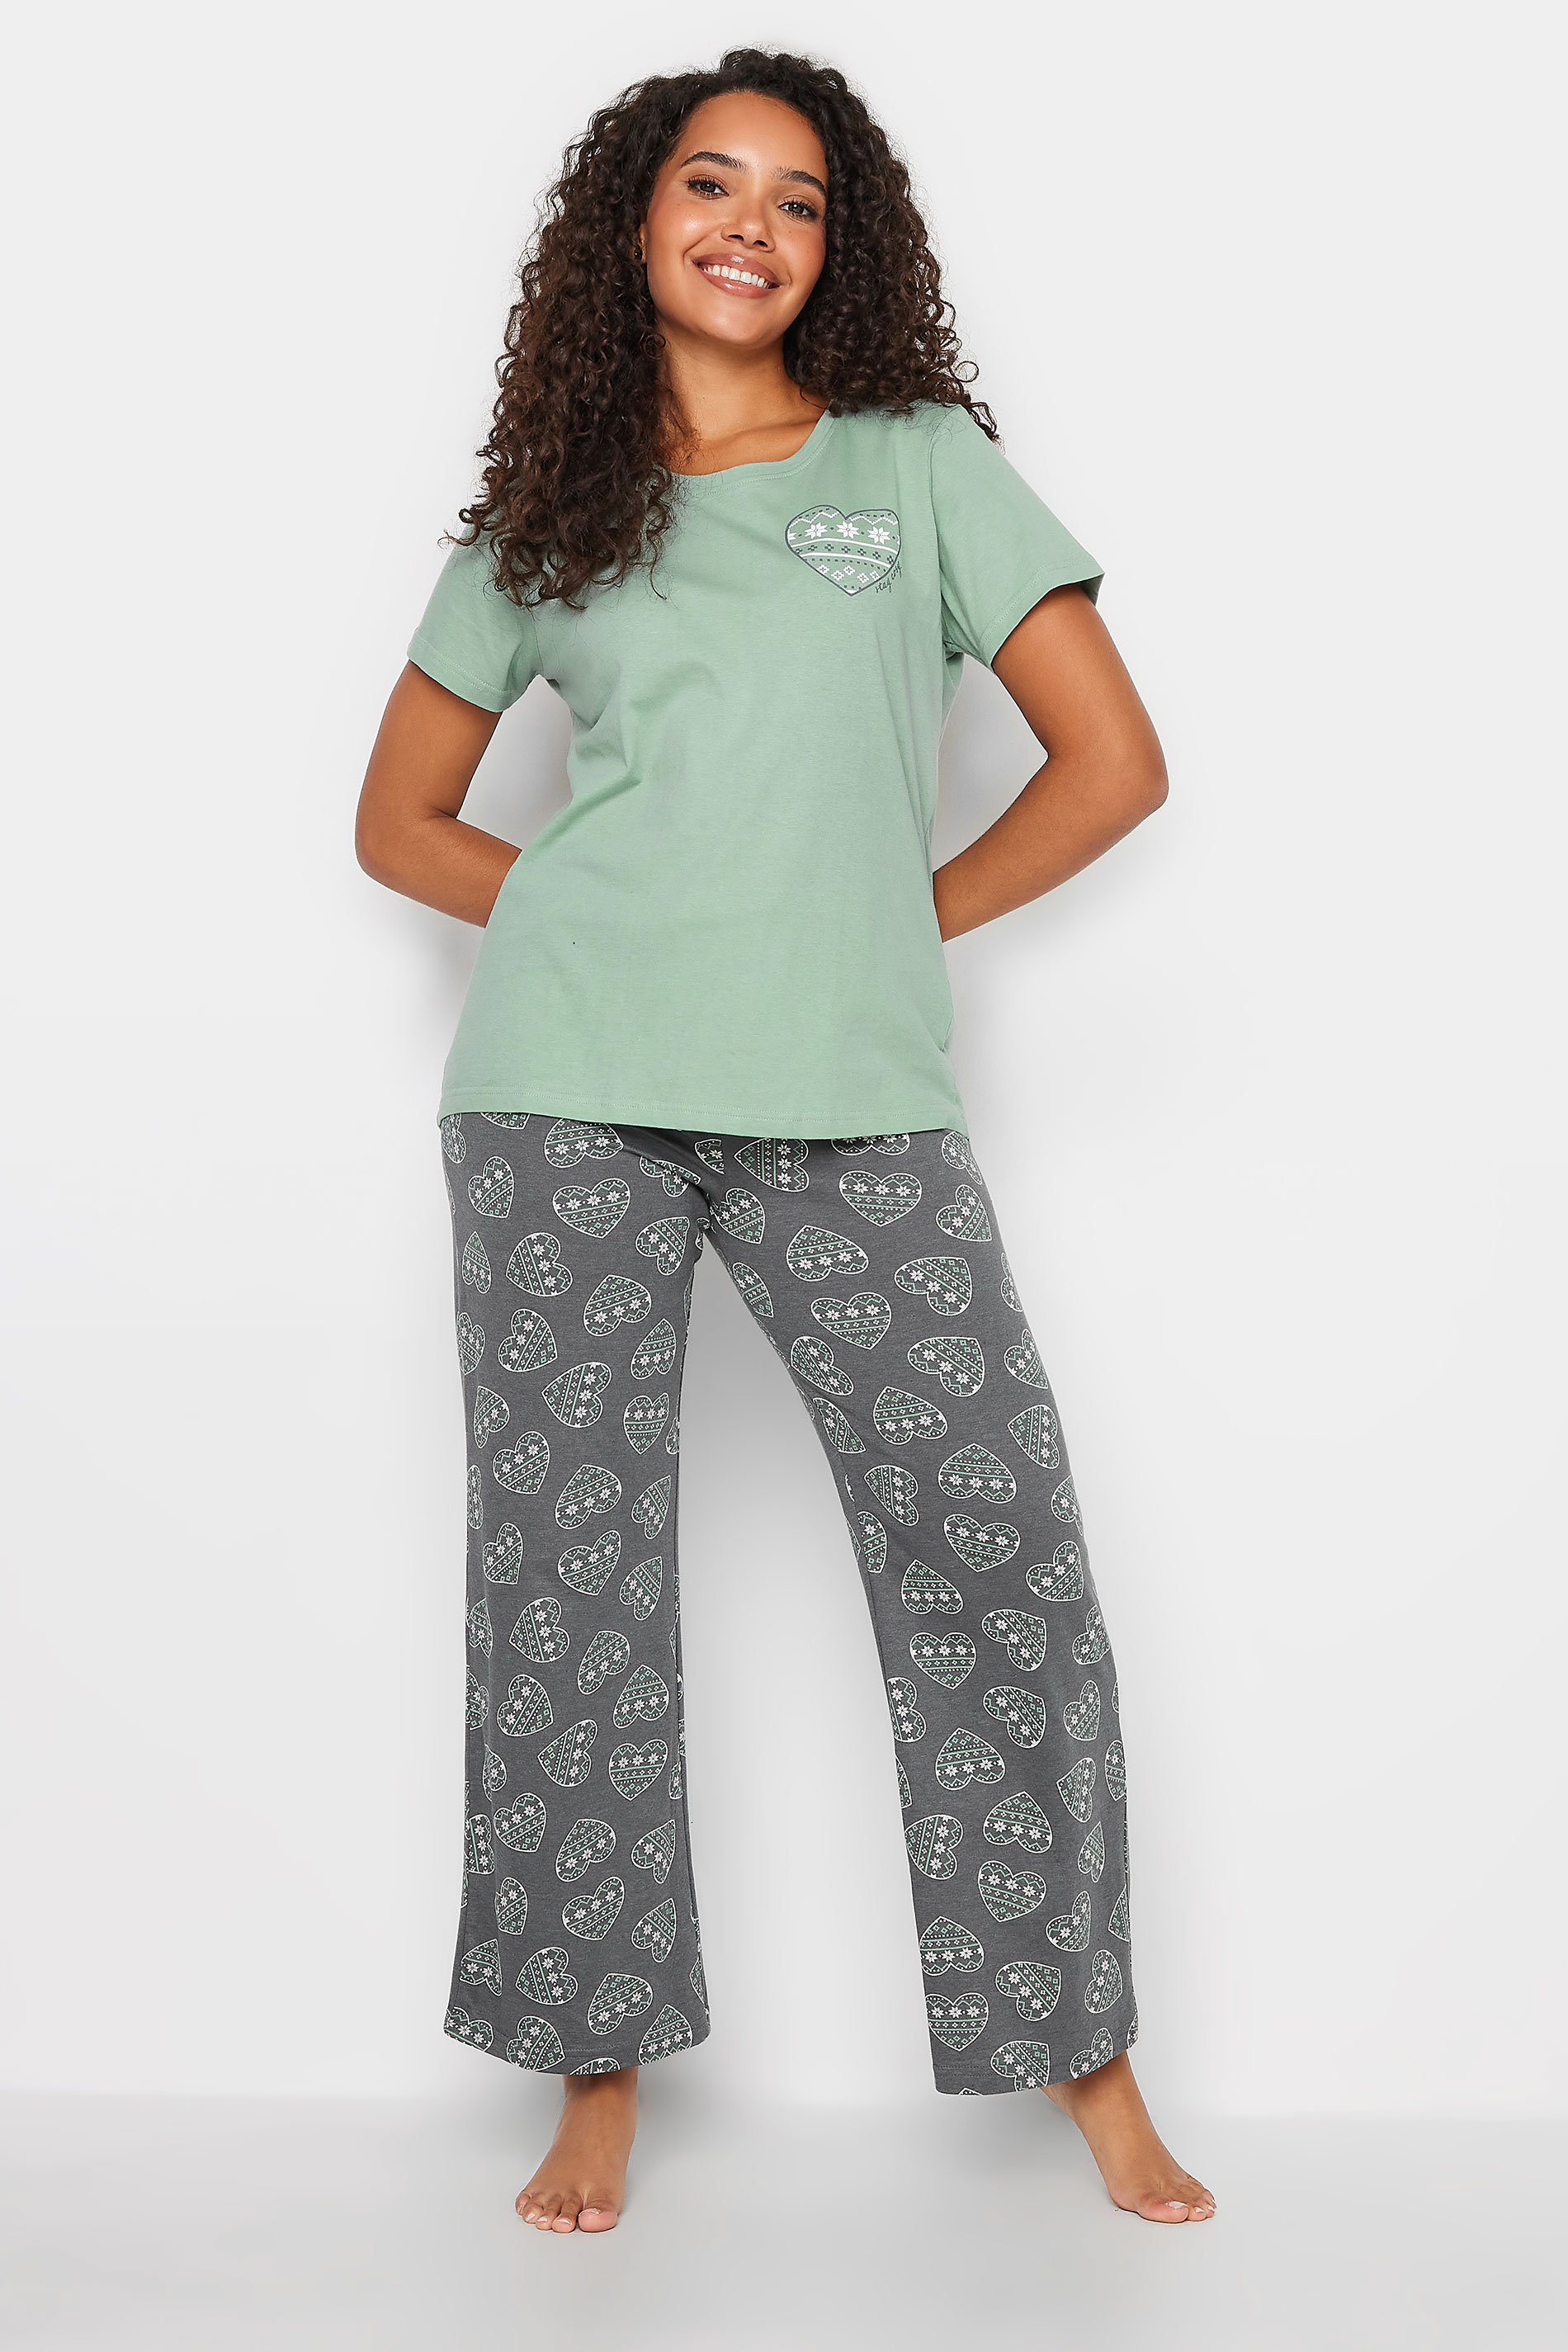 M&Co Green & Grey Cotton Fairisle Heart Print Wide Leg Pyjama Set | M&Co 2